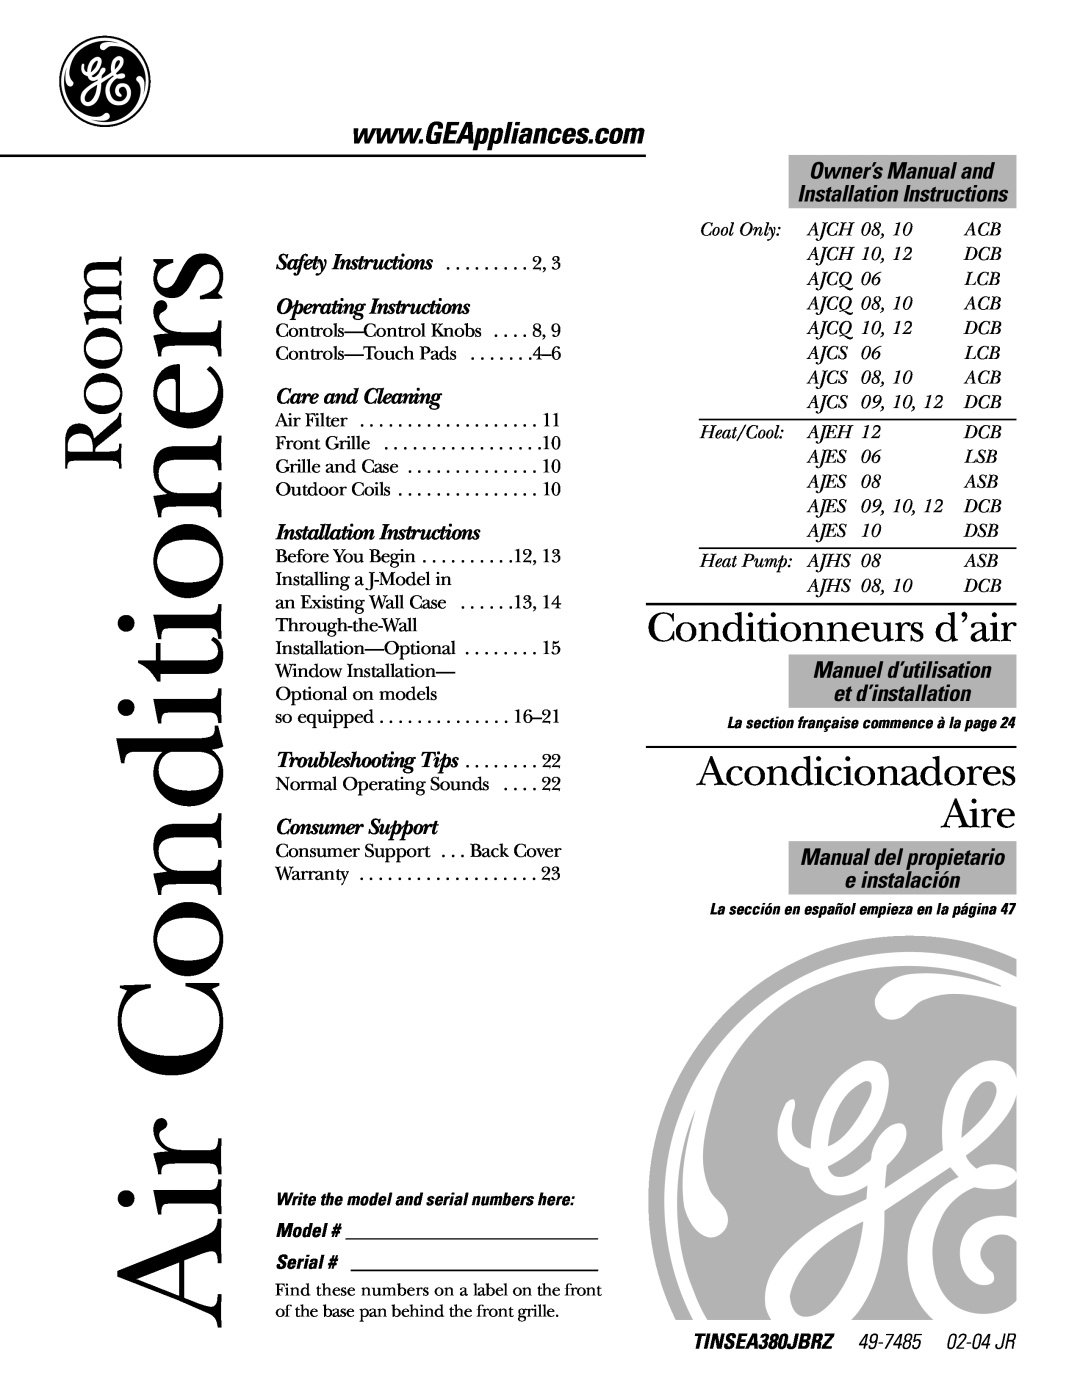 GE ACB AJCS 12 DCB operating instructions Conditionneurs d’air, Acondicionadores Aire, Room, Operating Instructions 